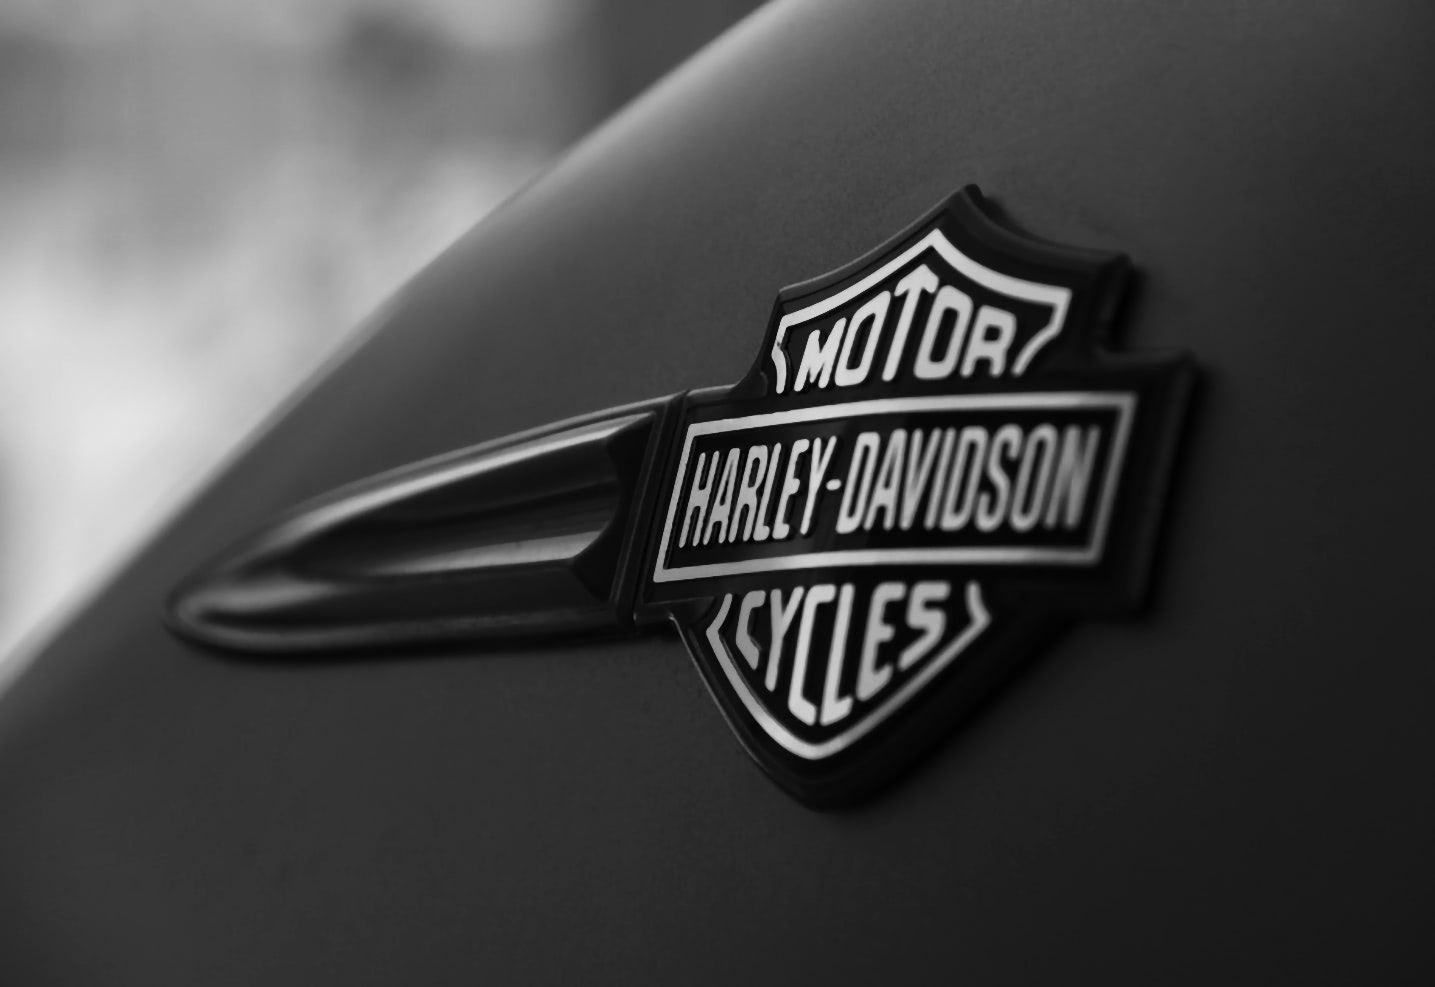 logo Harley-Davidson